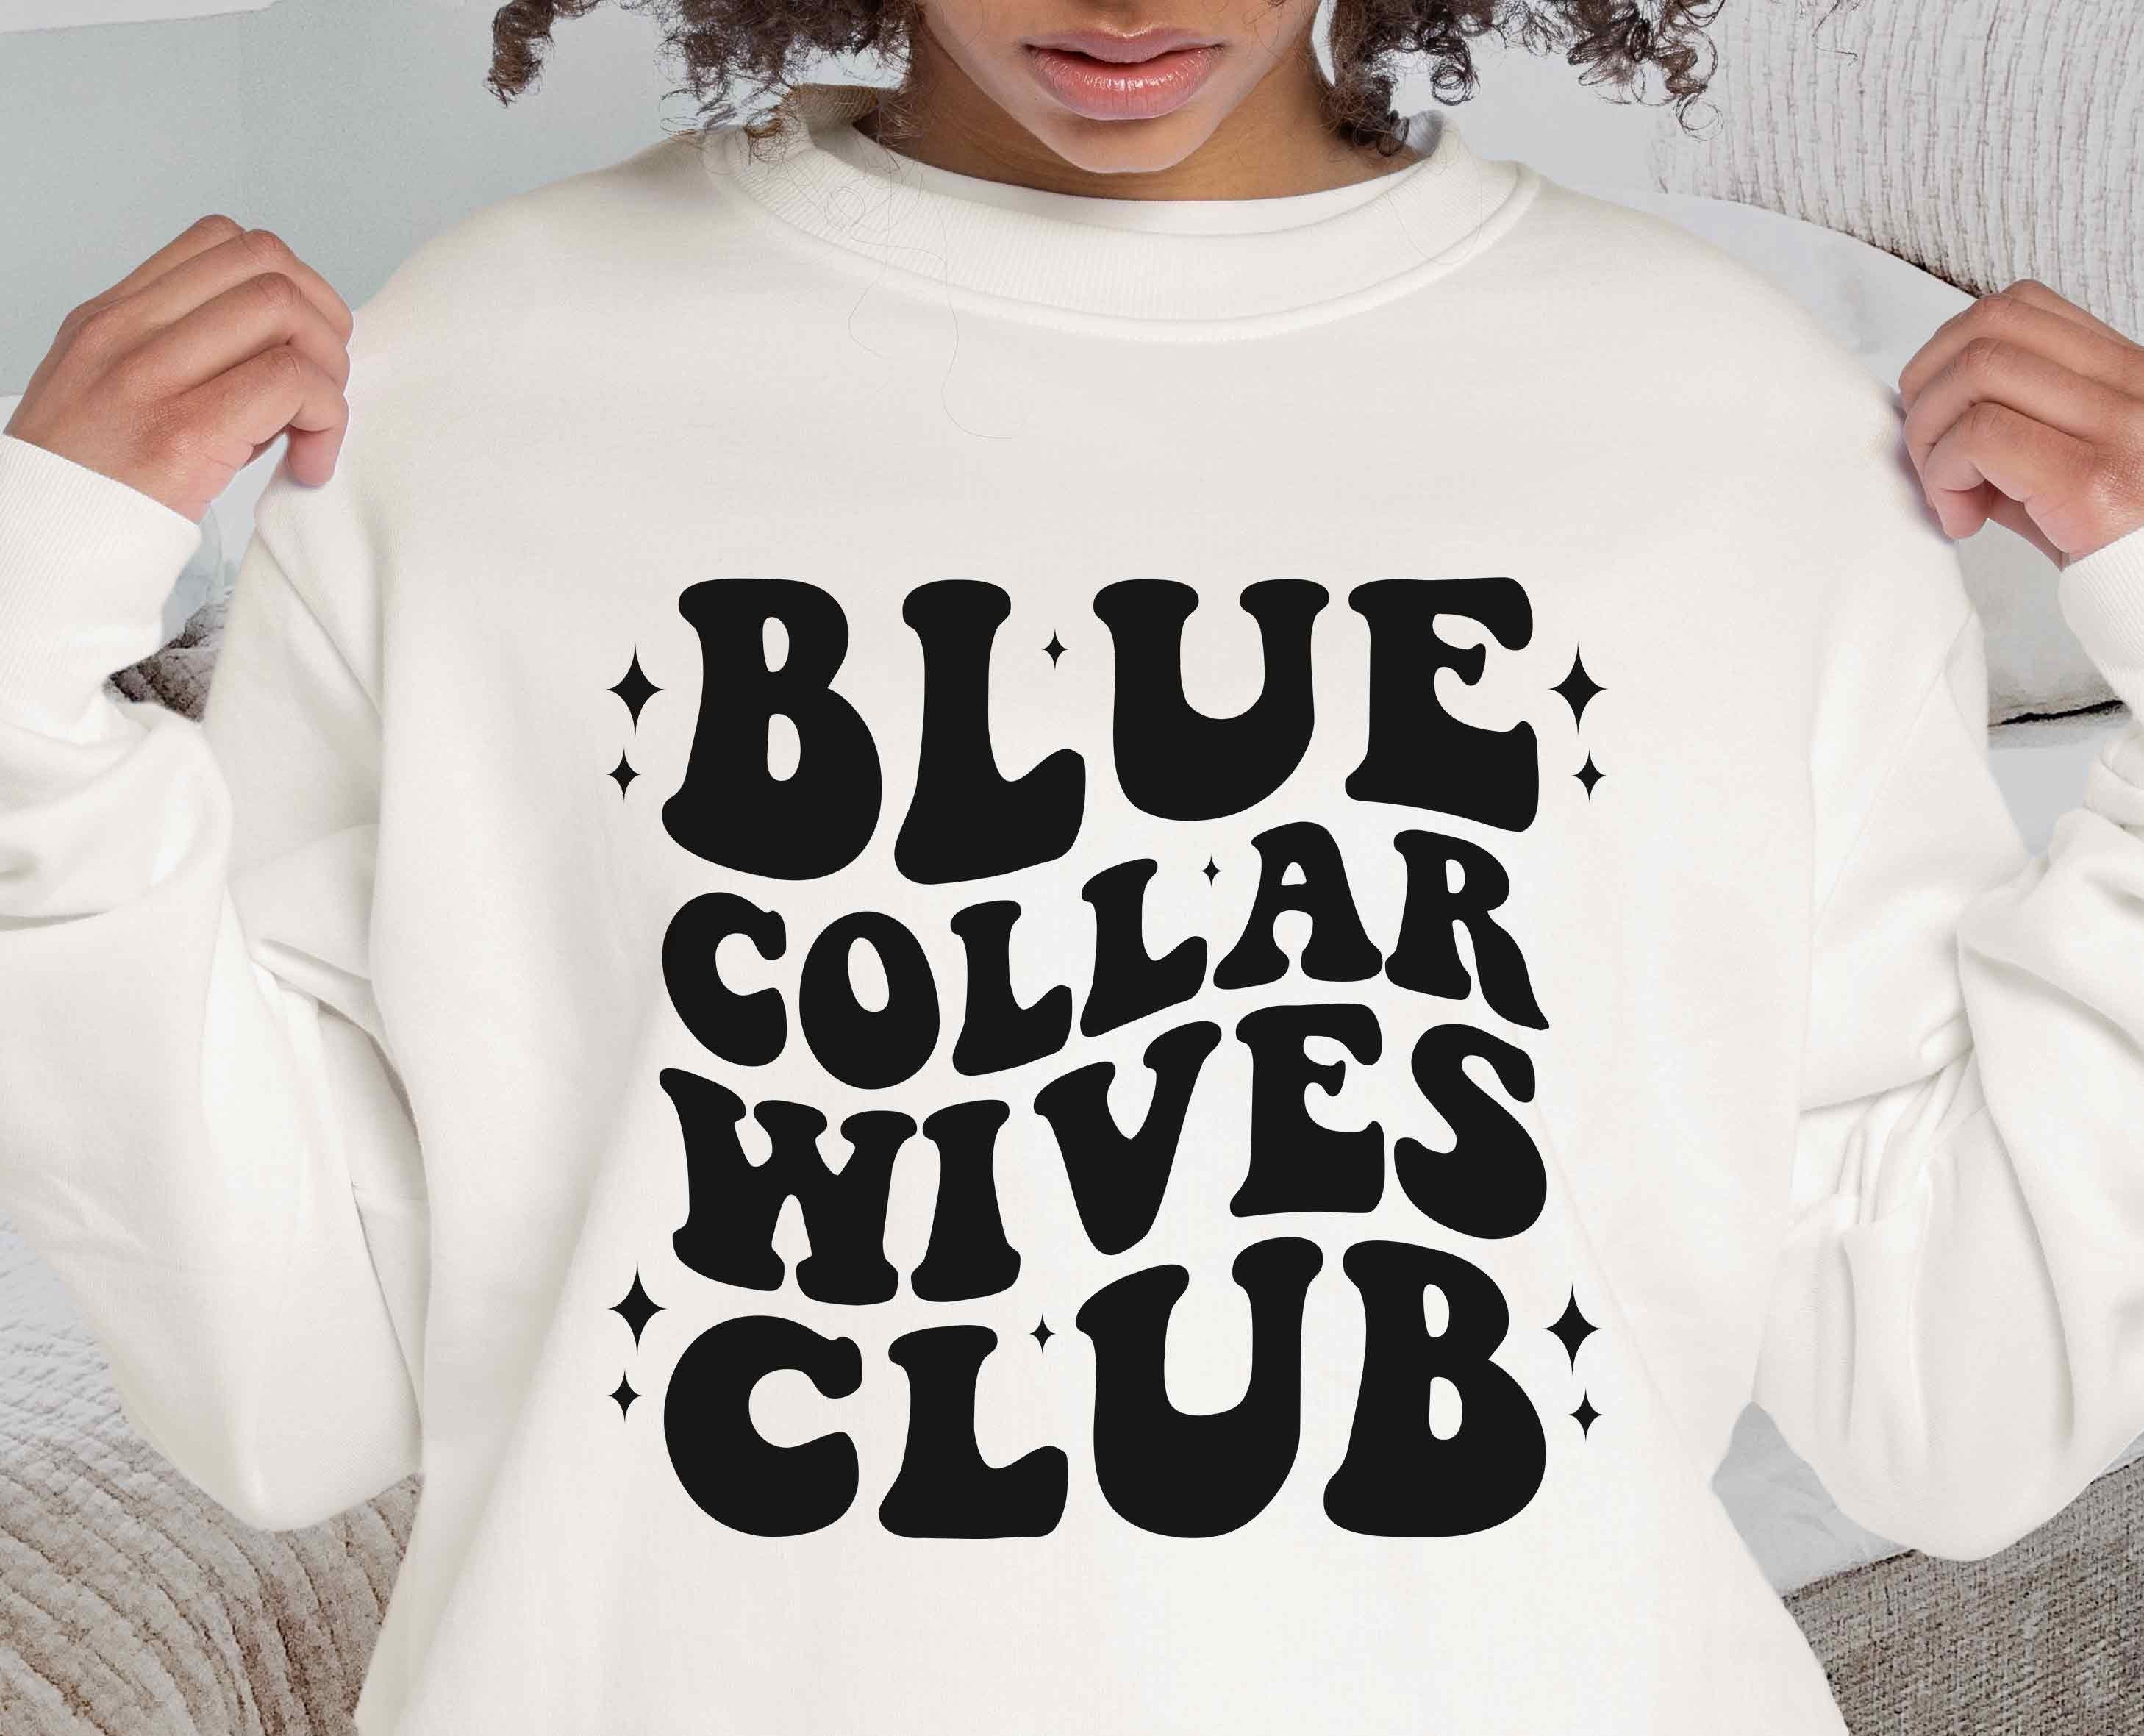 Blue Collar Wife - Shop Online